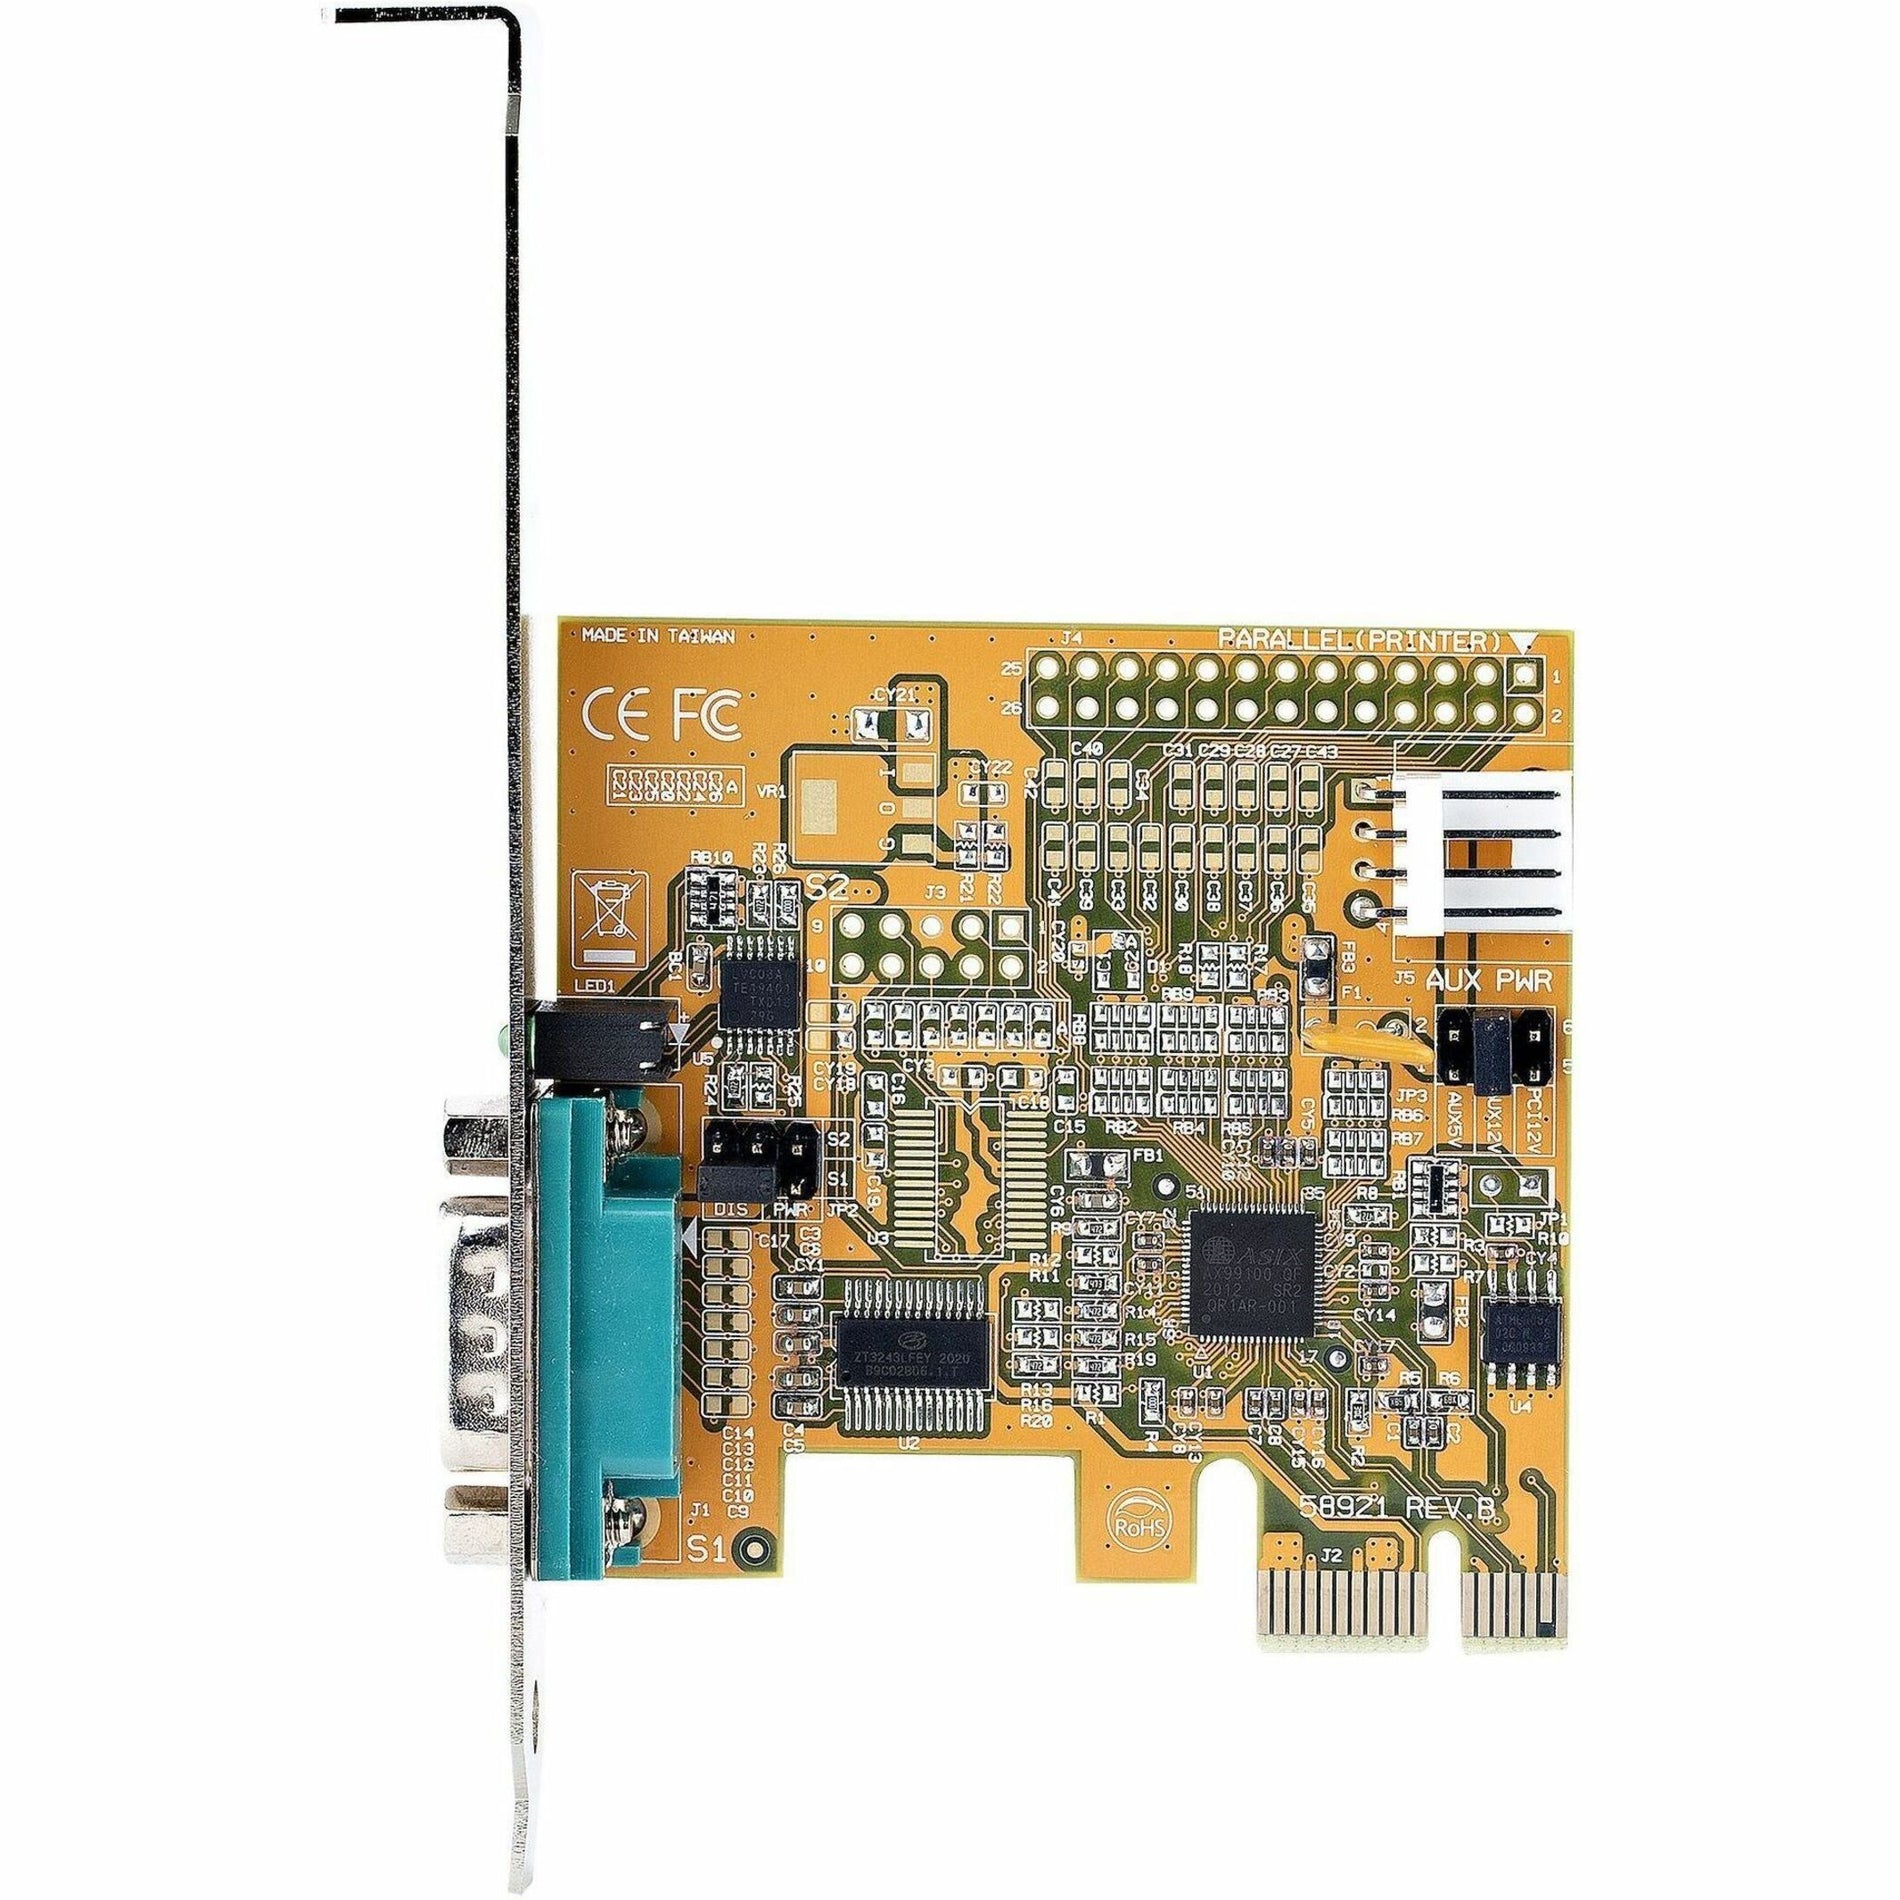 StarTech.com 11050-PC-SERIAL-CARD PCIe Serial Card, 1 External Serial Port, 2-Year Warranty